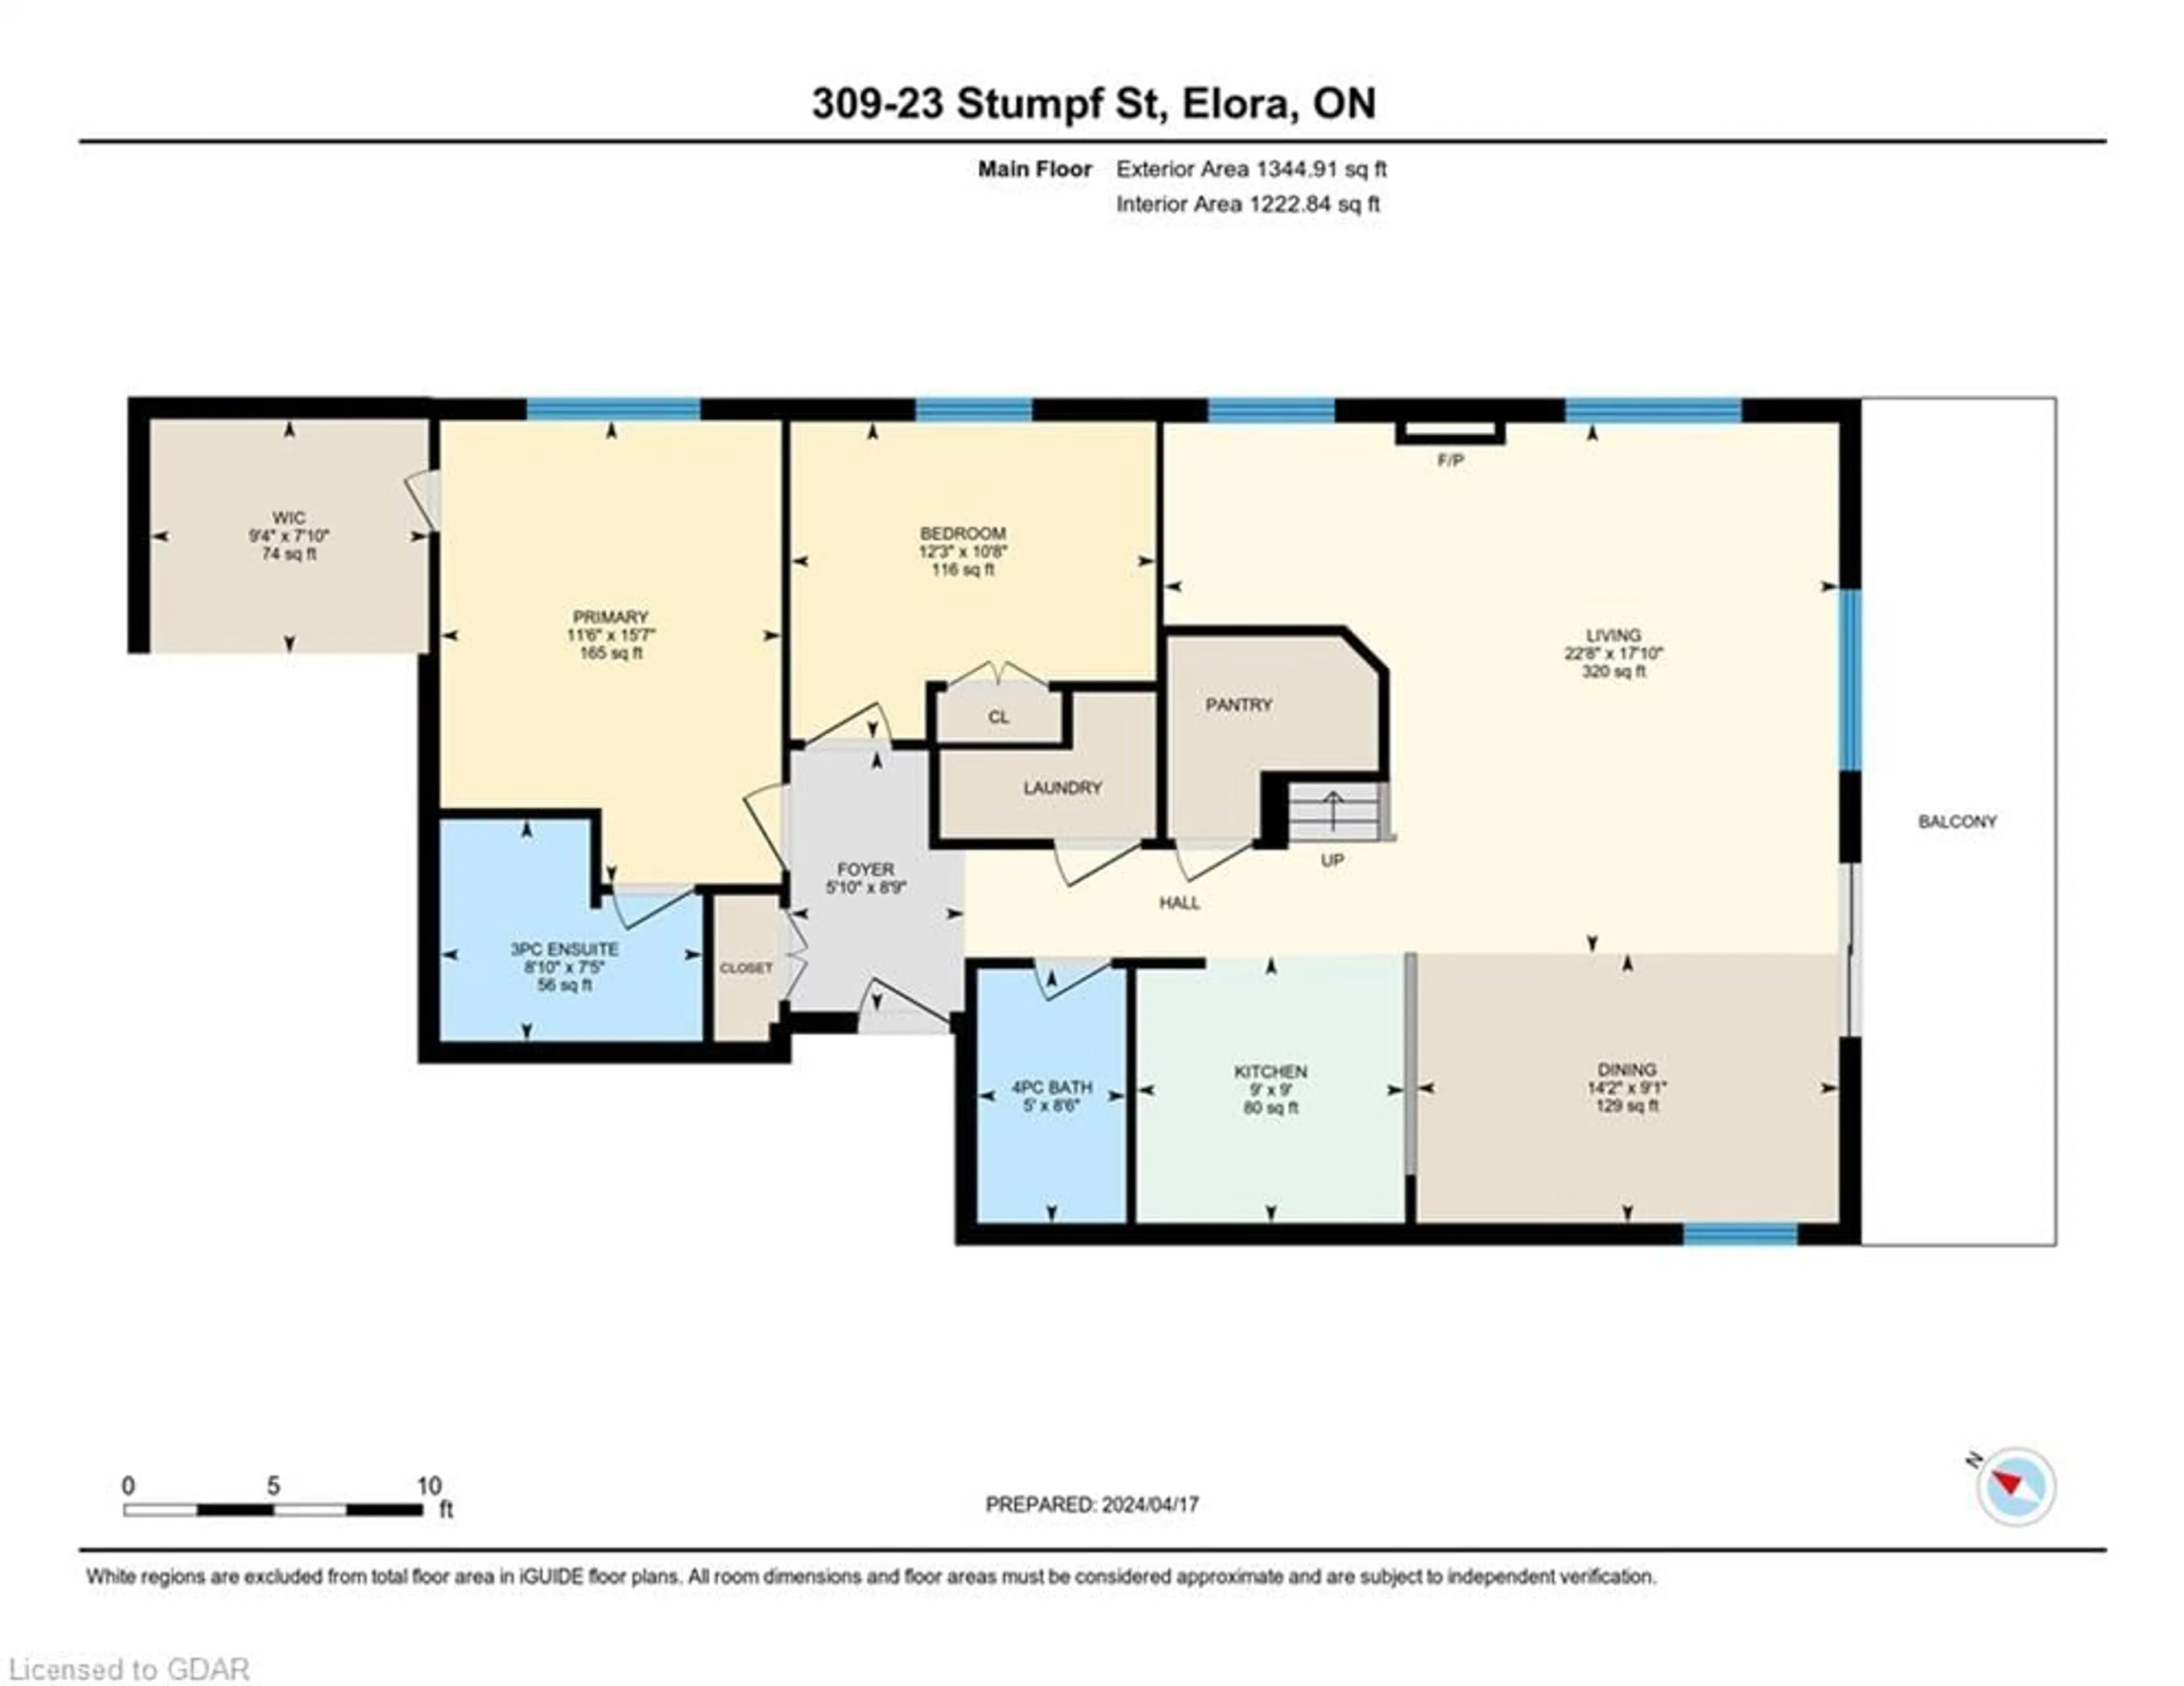 Floor plan for 23 Stumpf Street #309, Elora Ontario N0B 1S0